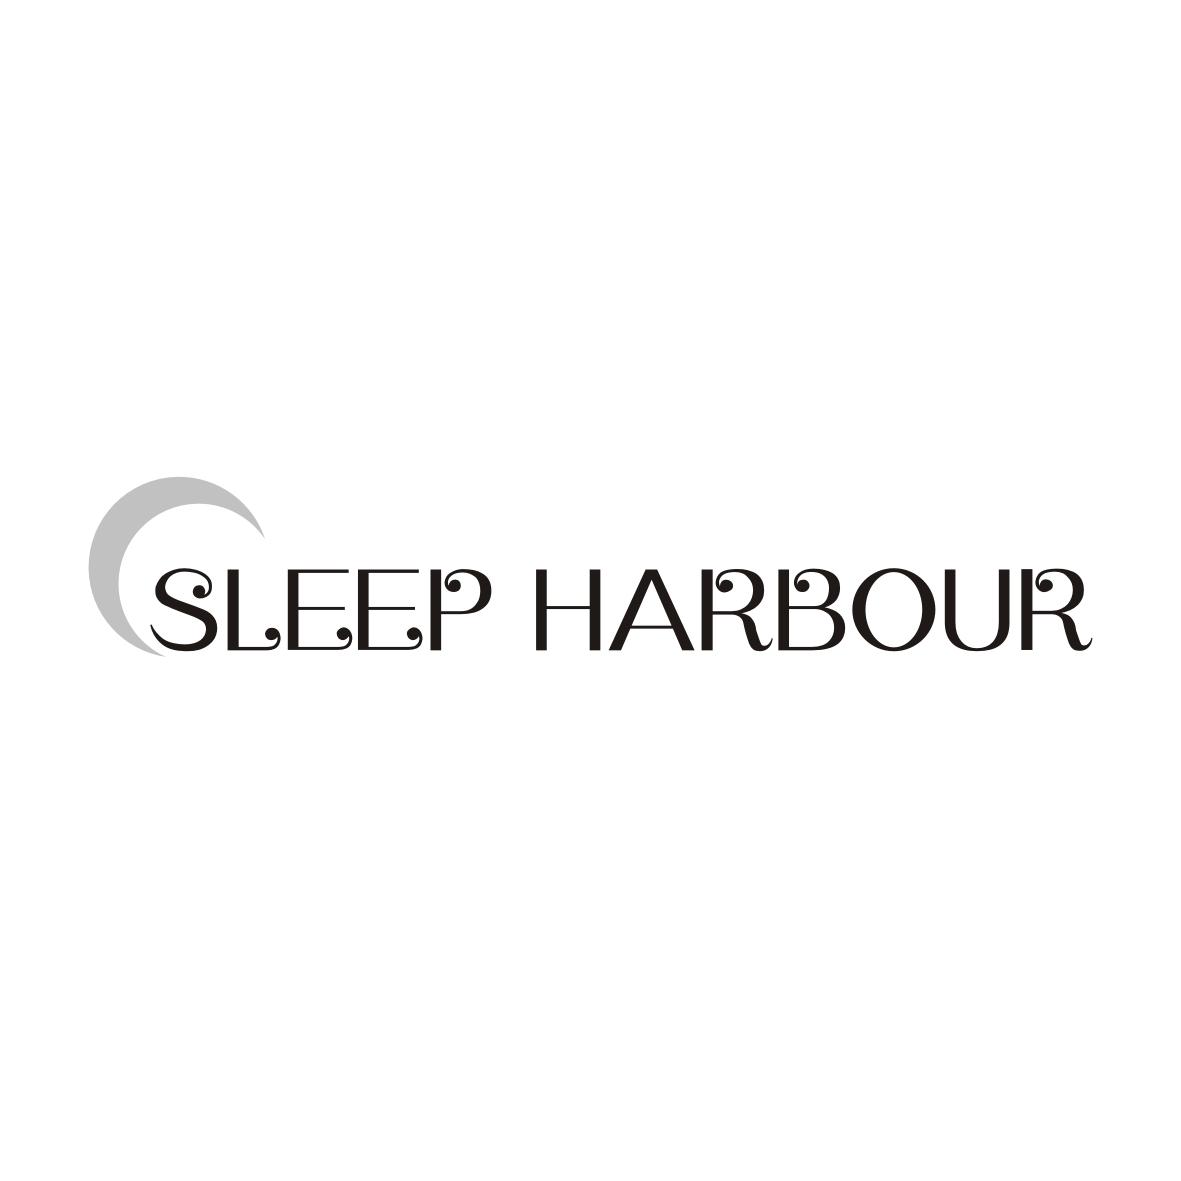 SLEEP HARBOUR